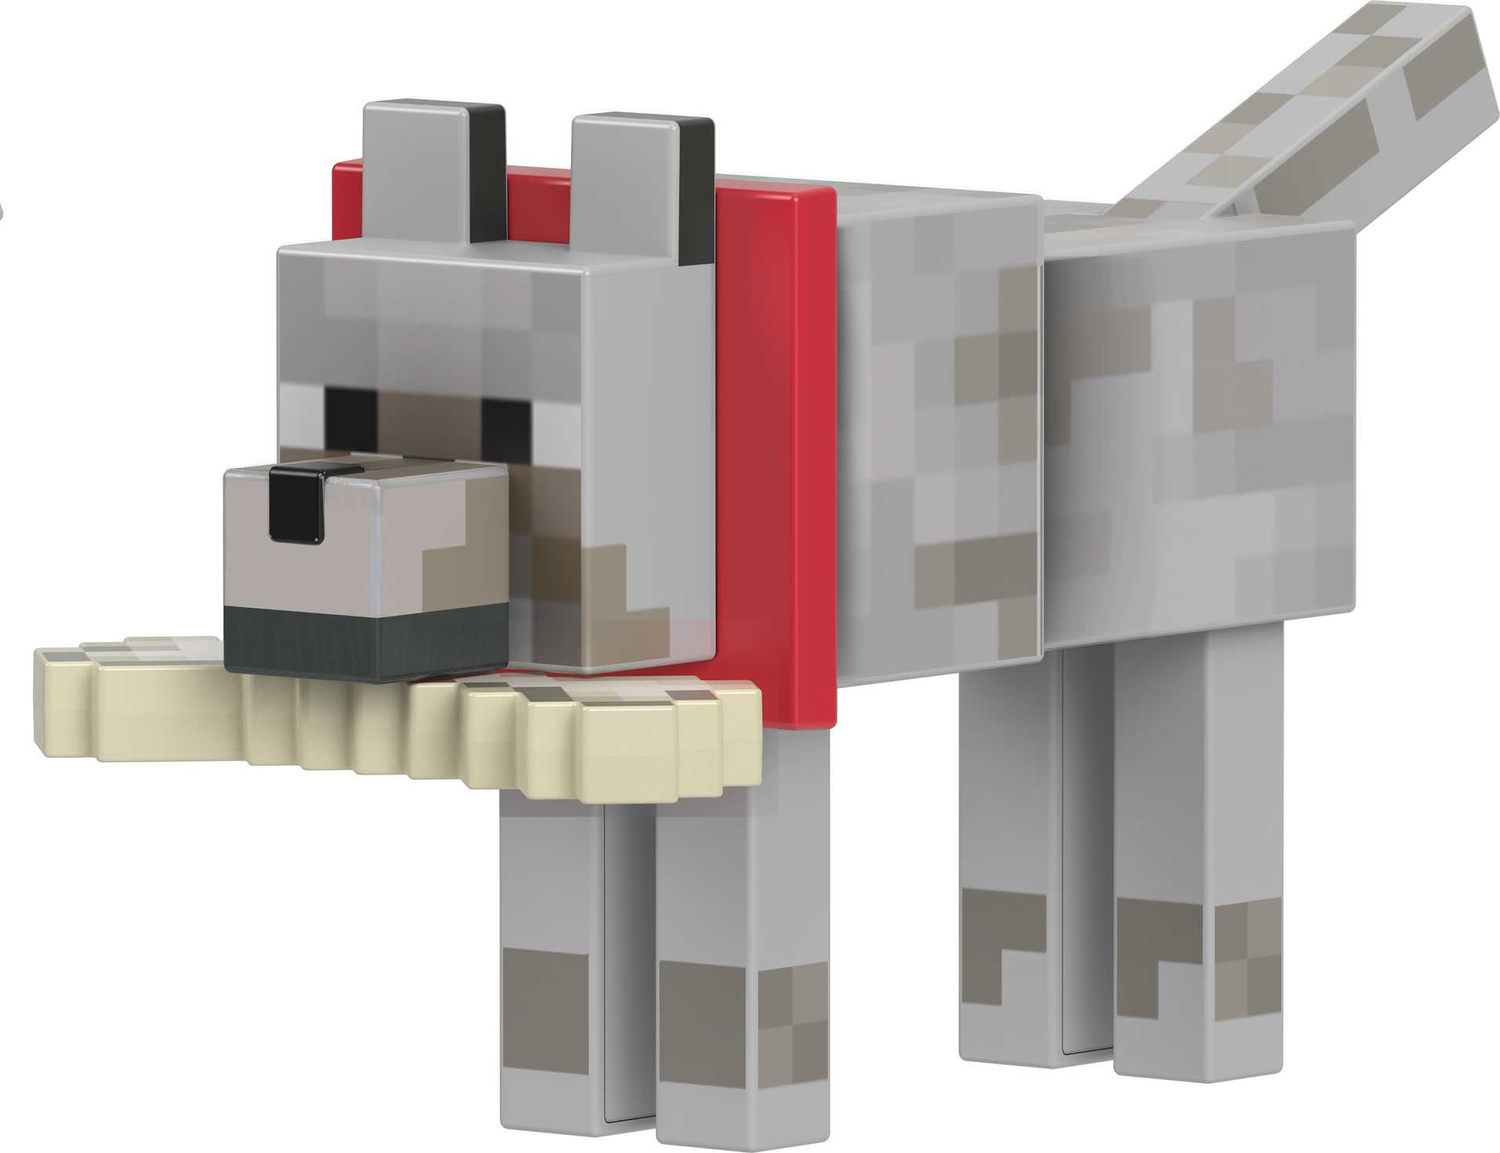 Minecraft DIAMOND LEVEL WOLF Figure